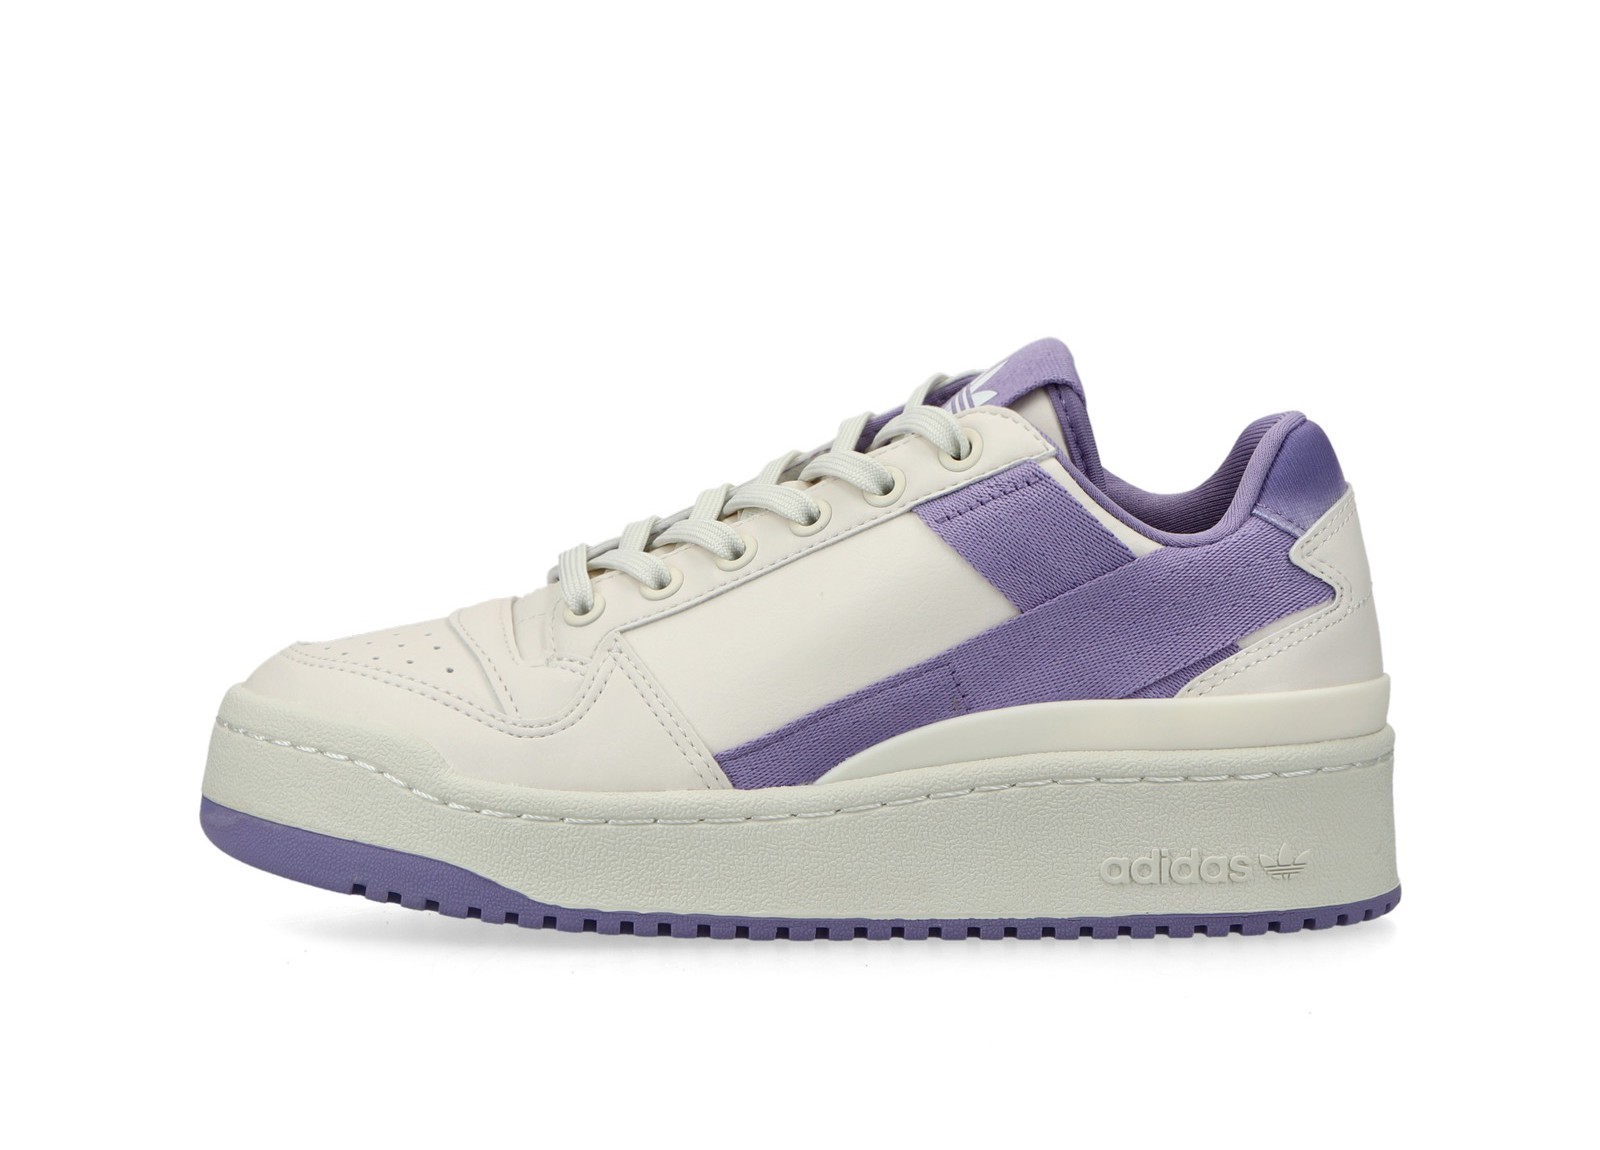 Adidas Forum Bold
White / Lilac